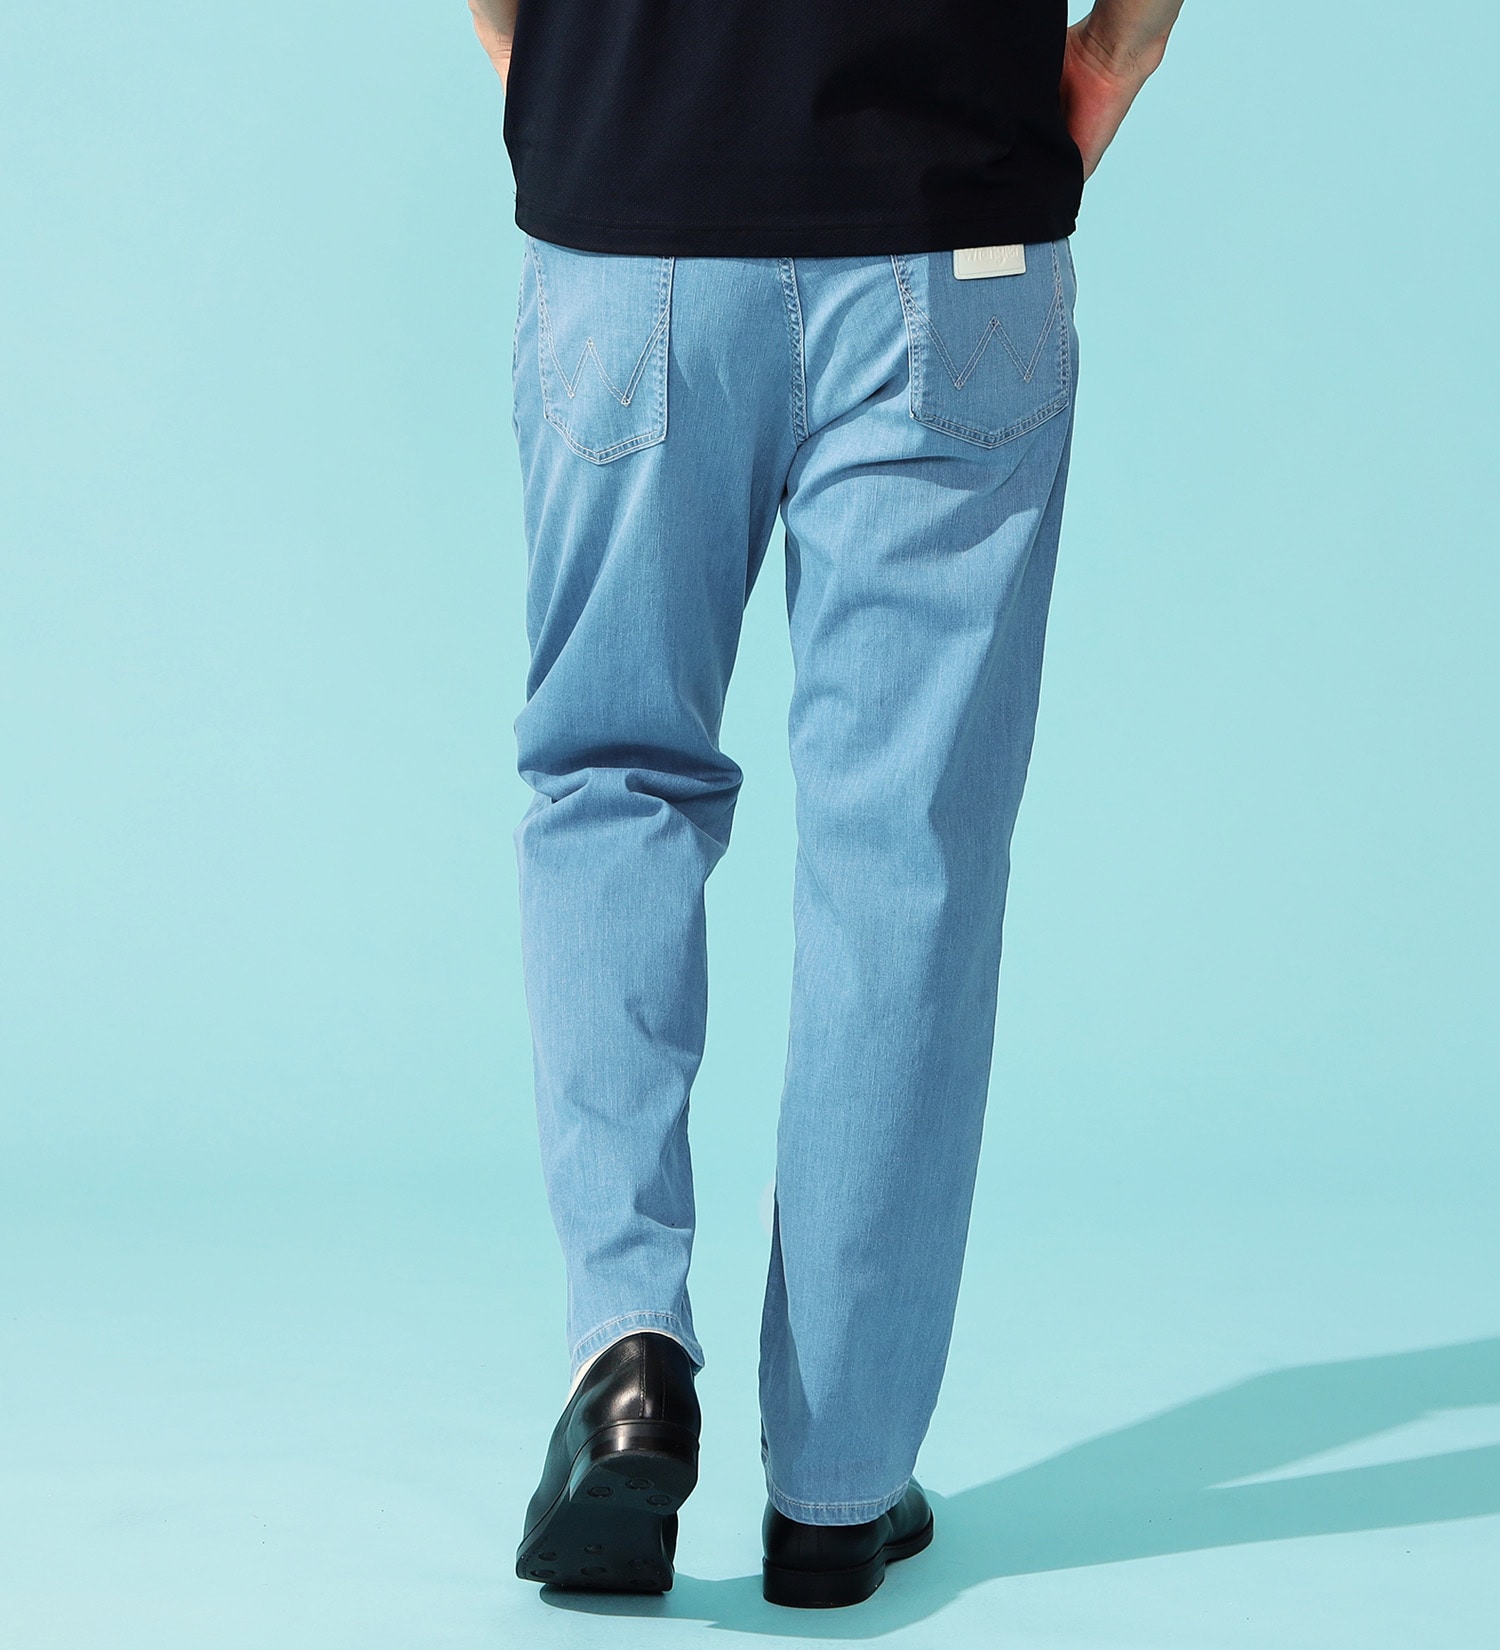 Wrangler(ラングラー)の【涼・COOL】ドライタッチストレートパンツ|パンツ/デニムパンツ/メンズ|淡色ブルー